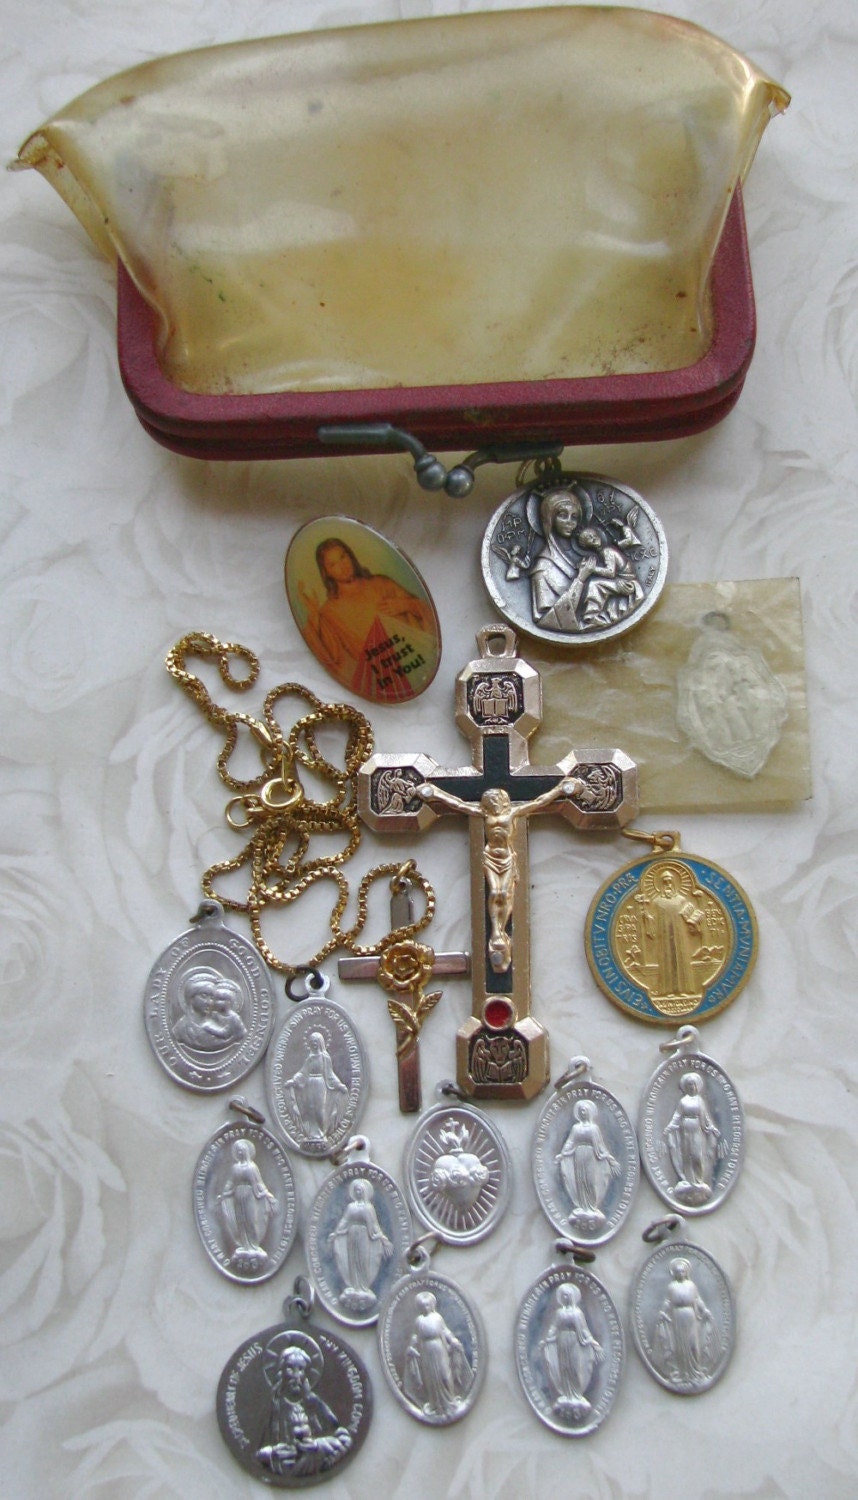 Old religious medals relic crucifix scapulars rosaries